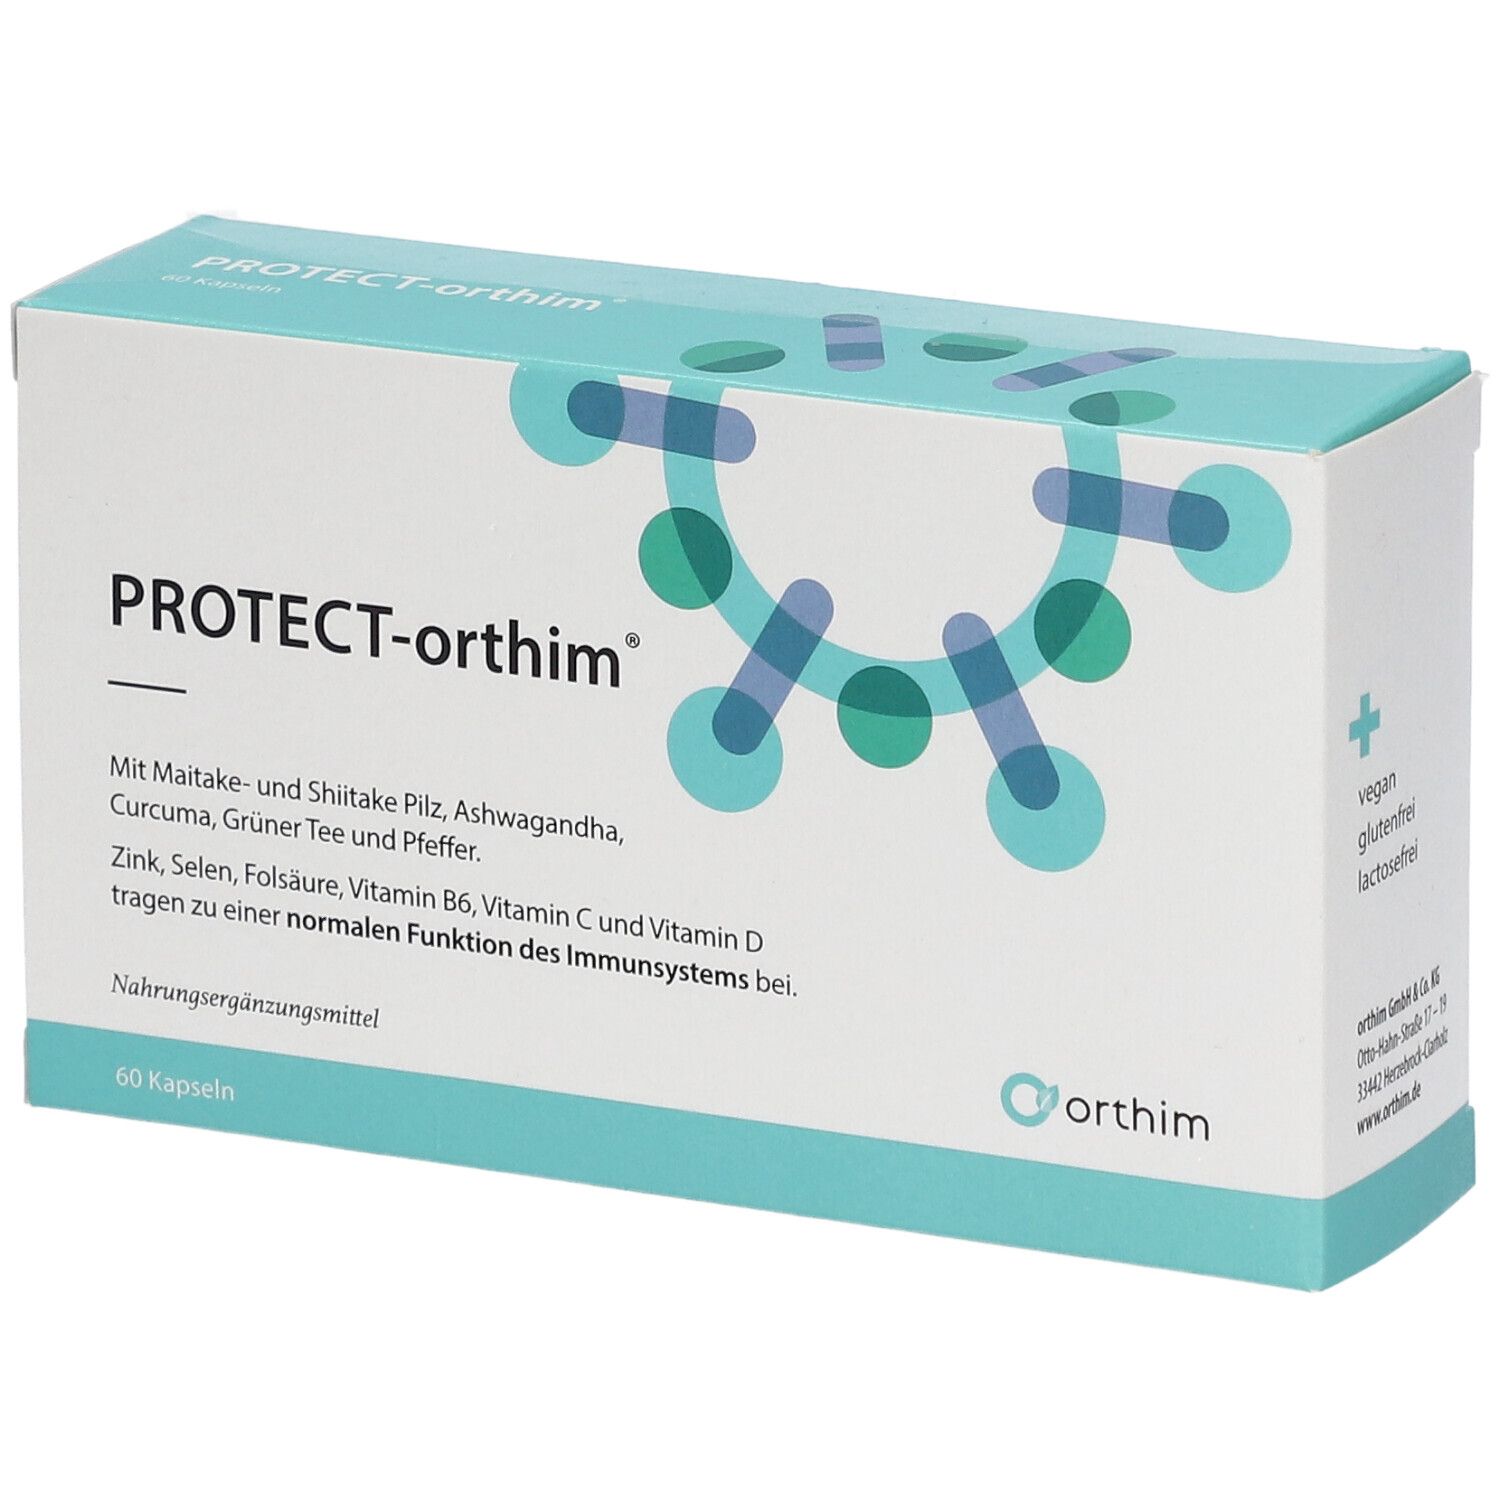 PROTECT-orthim®